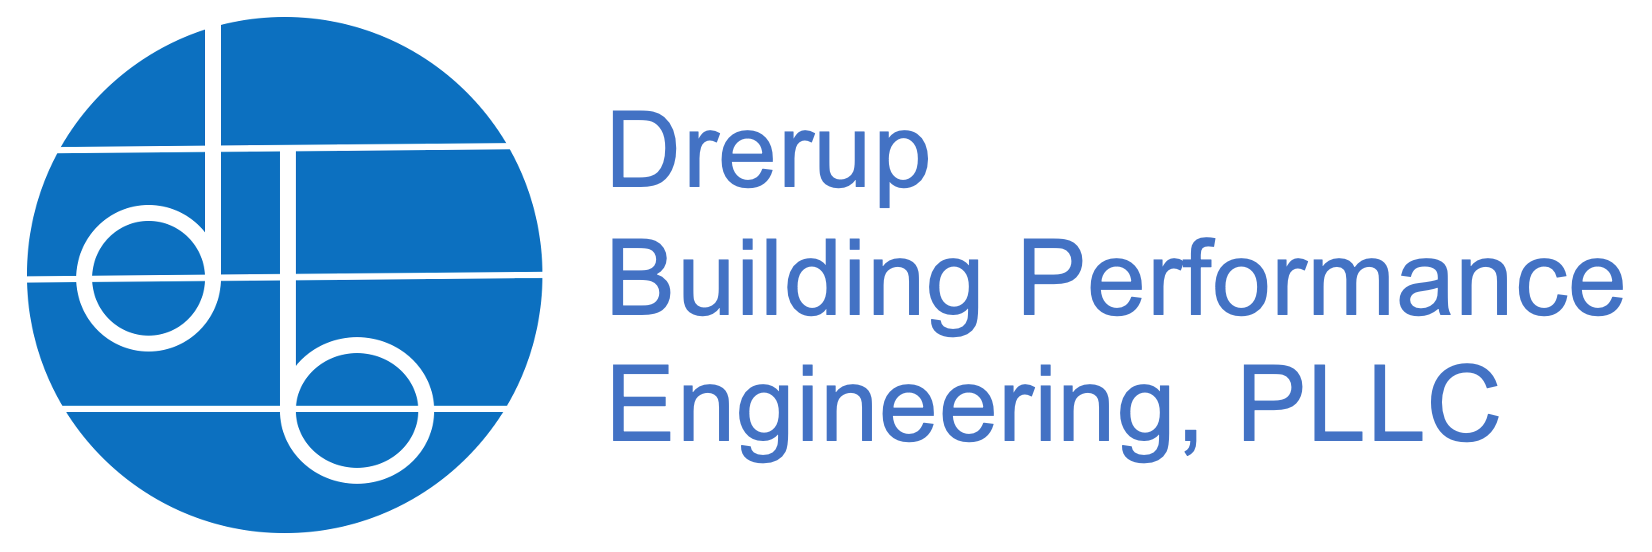 Drerup Building Performance Engineering, PLLC